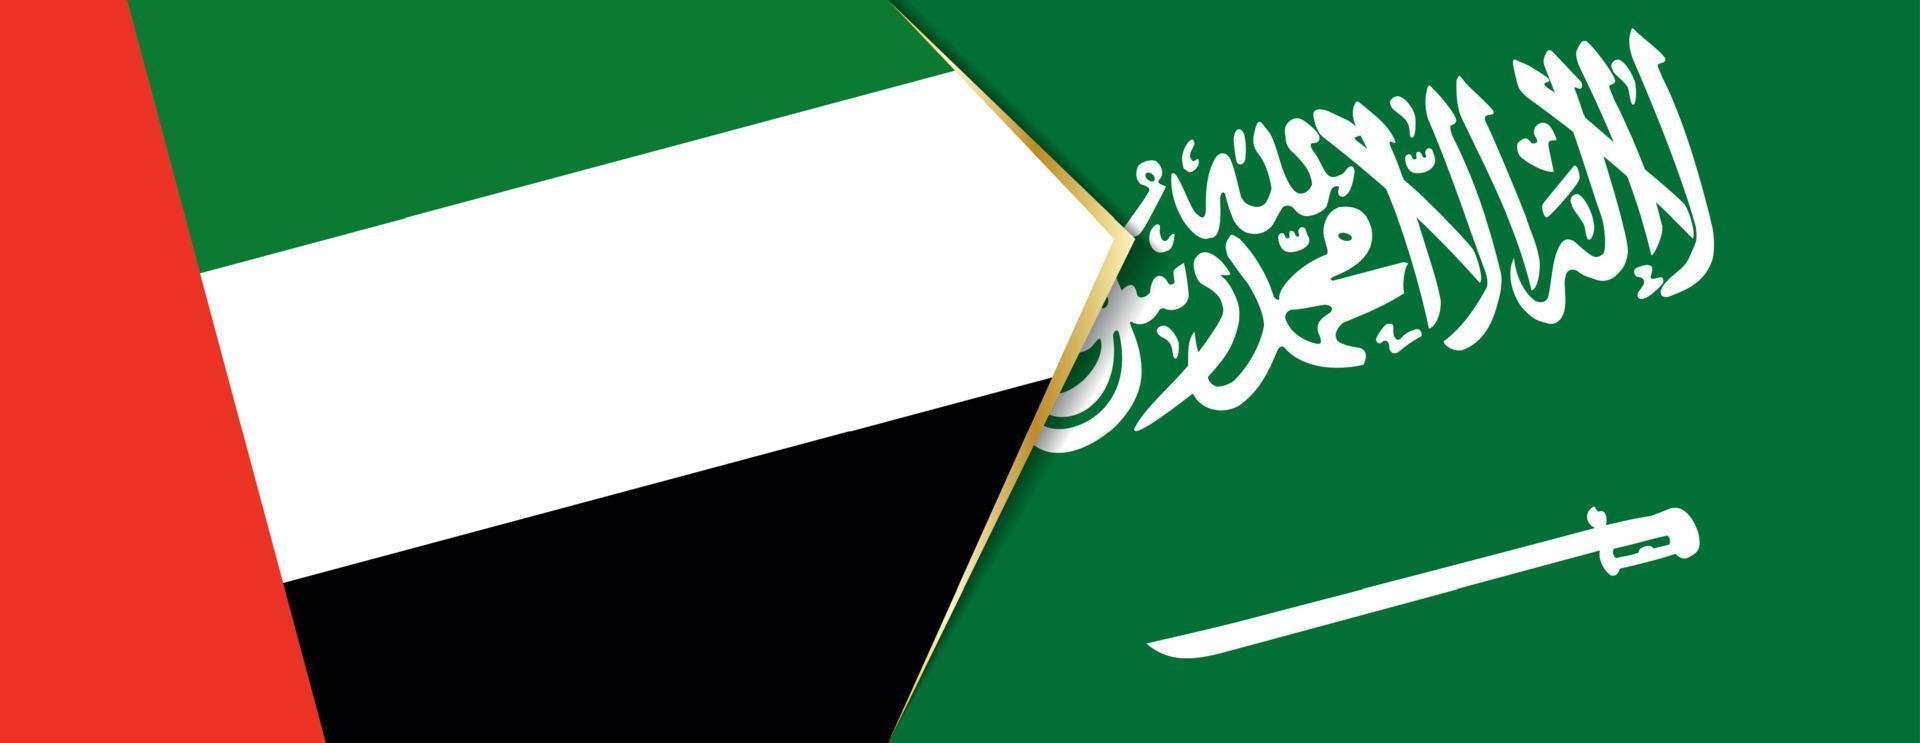 United Arab Emirates and Saudi Arabia flags, two vector flags.